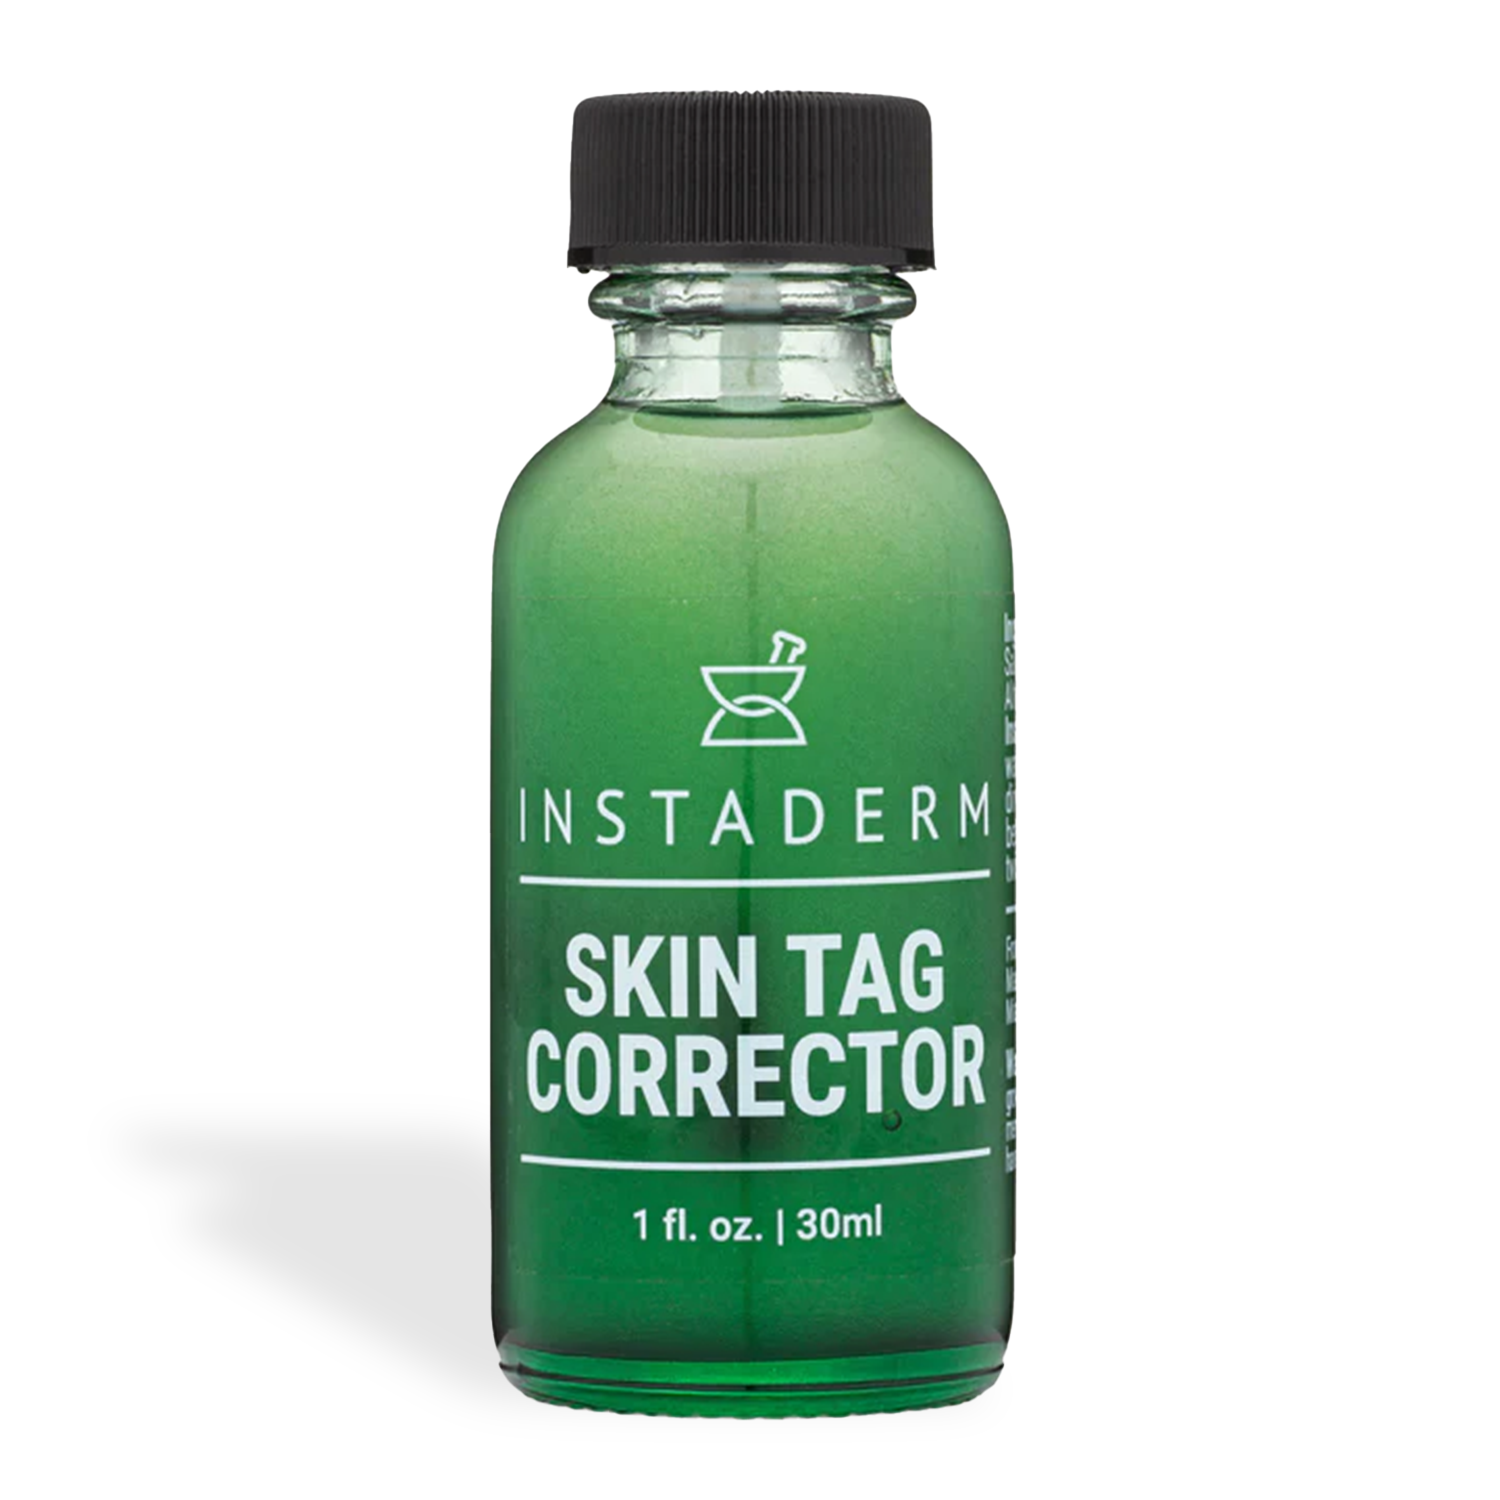 Instaderm Skin Tag Corrector